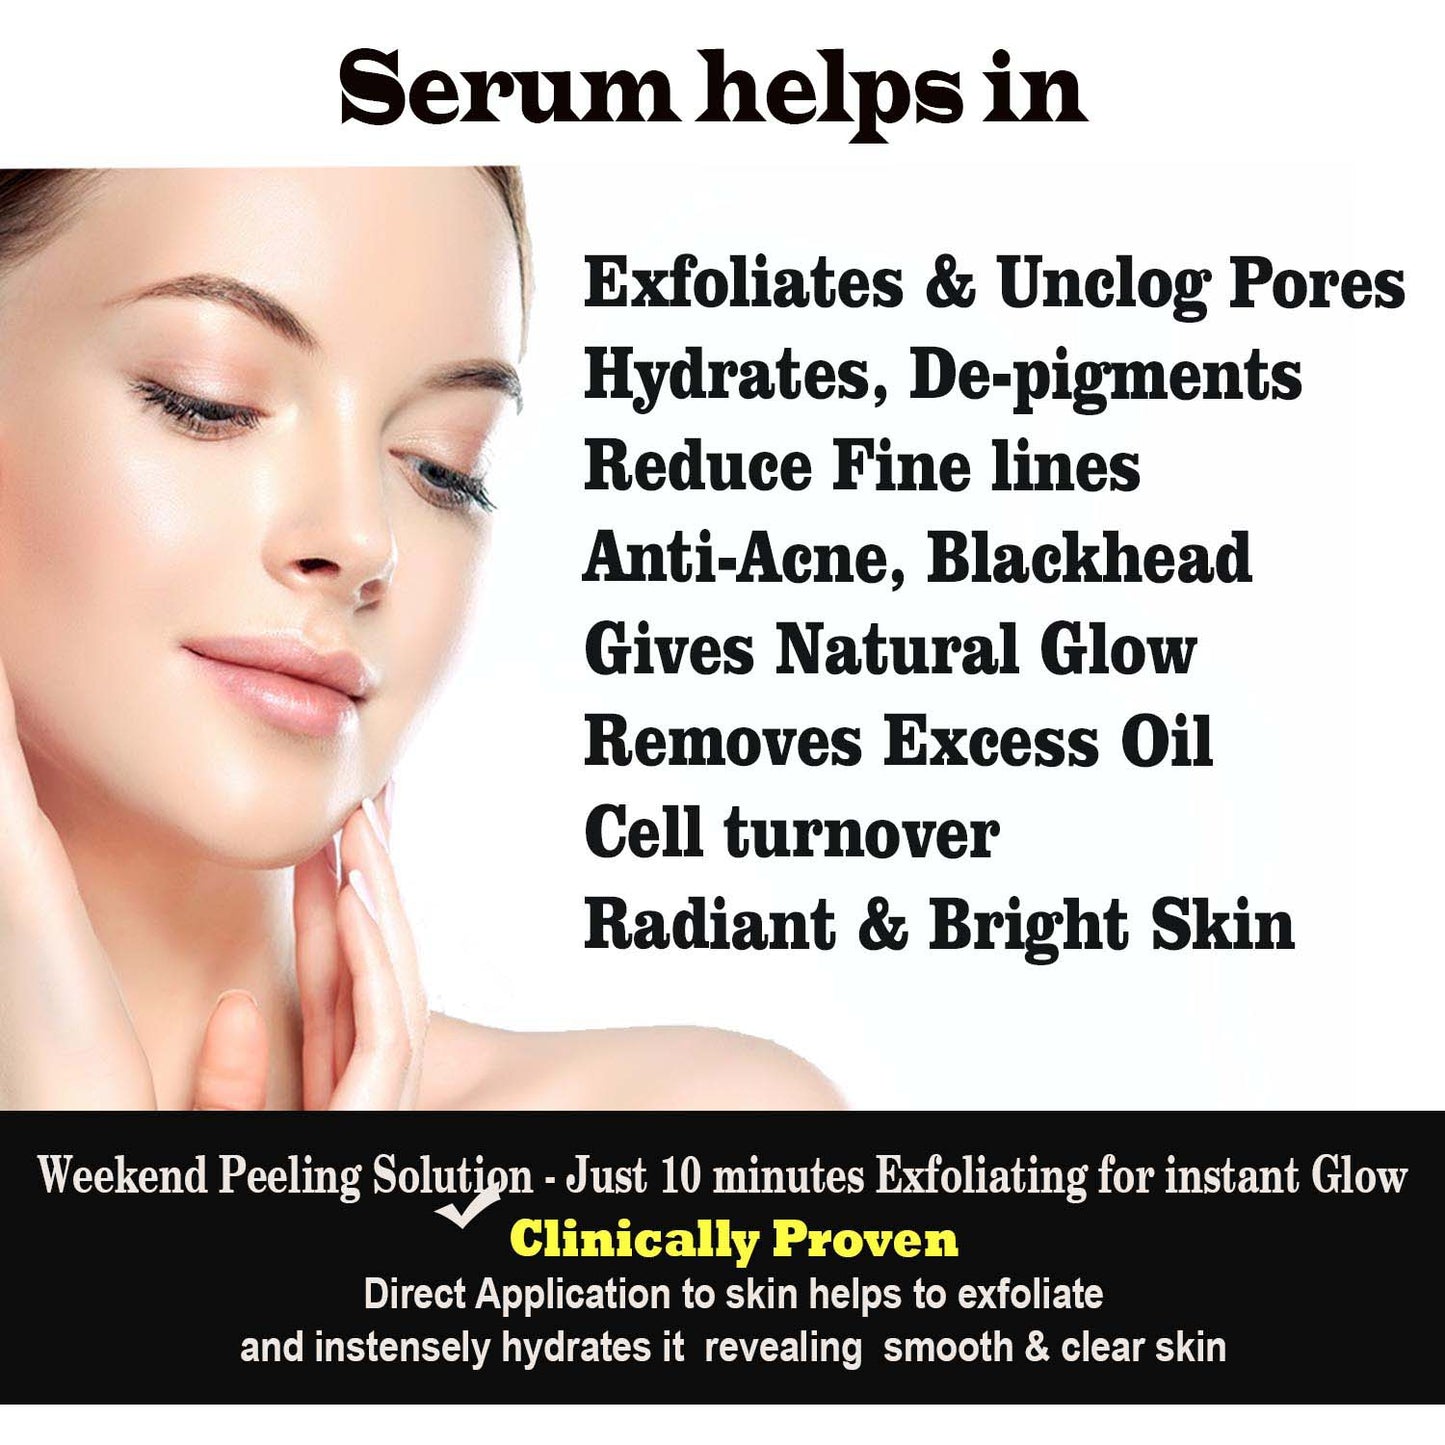 urbaano herbal face serum to reduce fine lines, acne, dark spots, excess oil